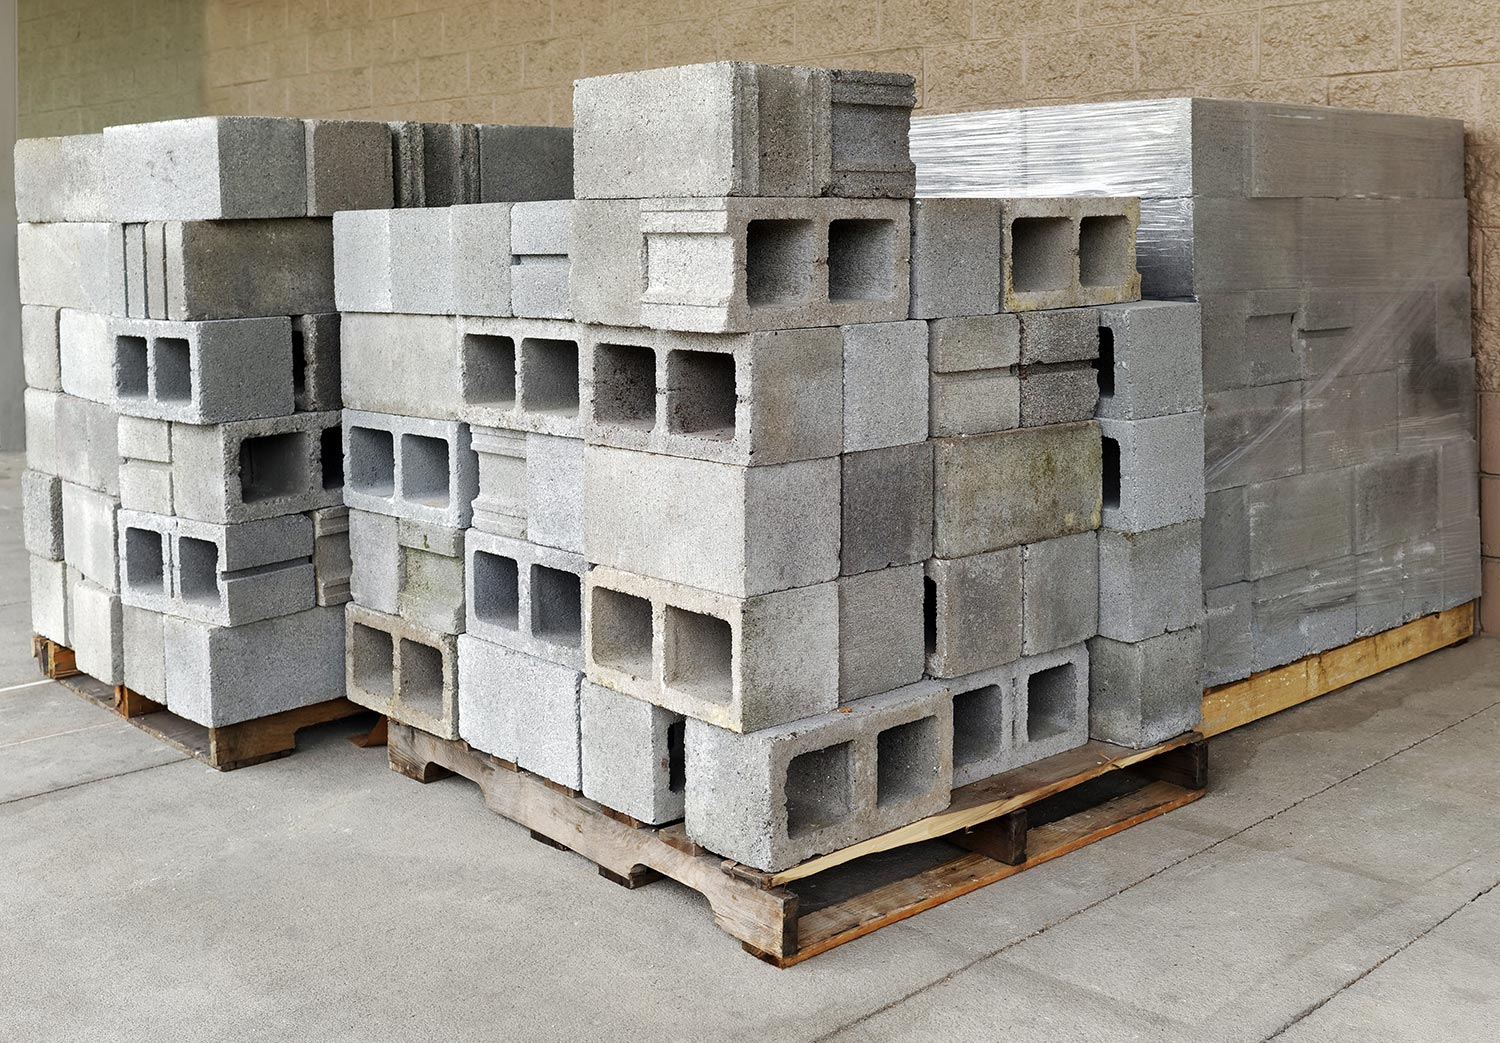 Merchant's stack display of concrete cinder blocks on wood palettes